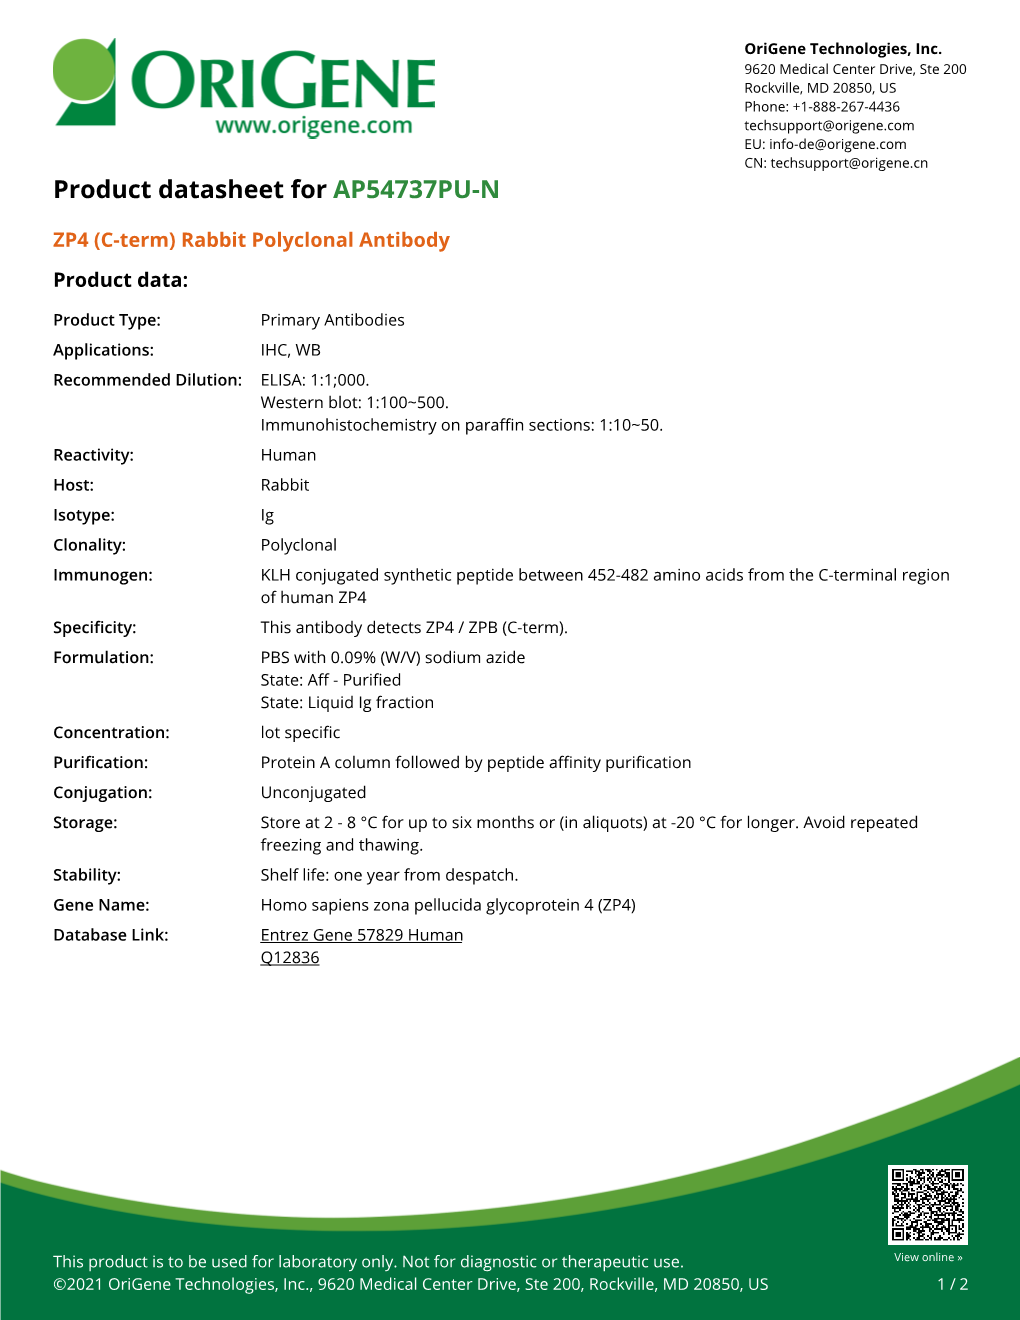 ZP4 (C-Term) Rabbit Polyclonal Antibody – AP54737PU-N | Origene